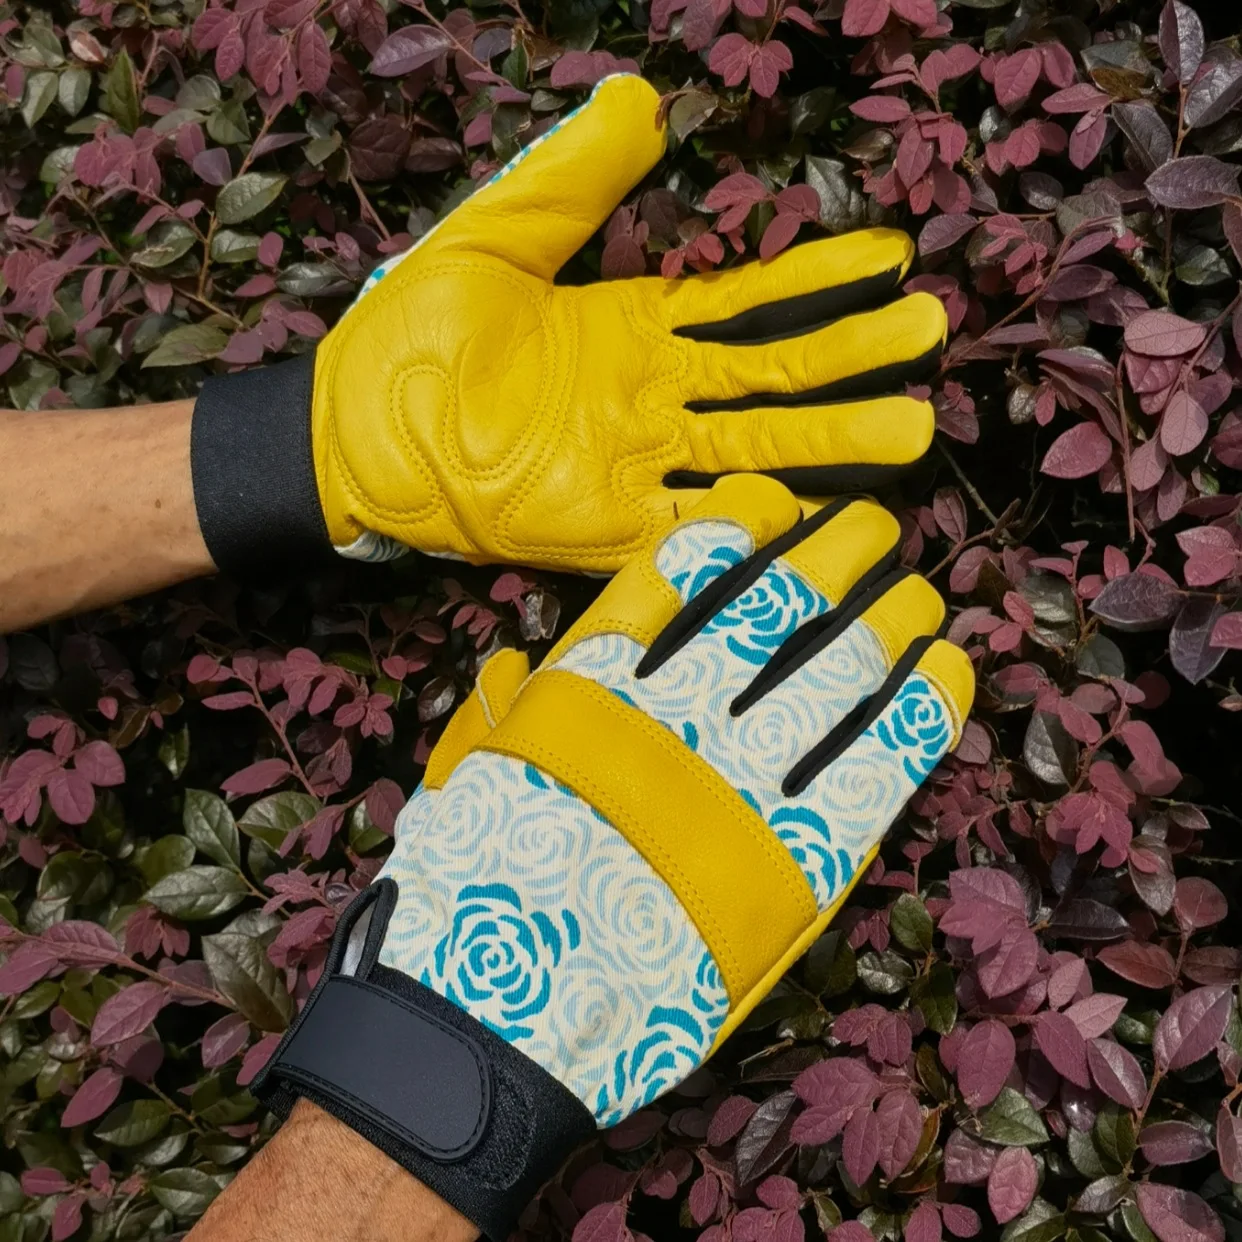 Thornproof Long Gauntlet Gloves, Rose Pruning Gardening Gloves for Men & Women 